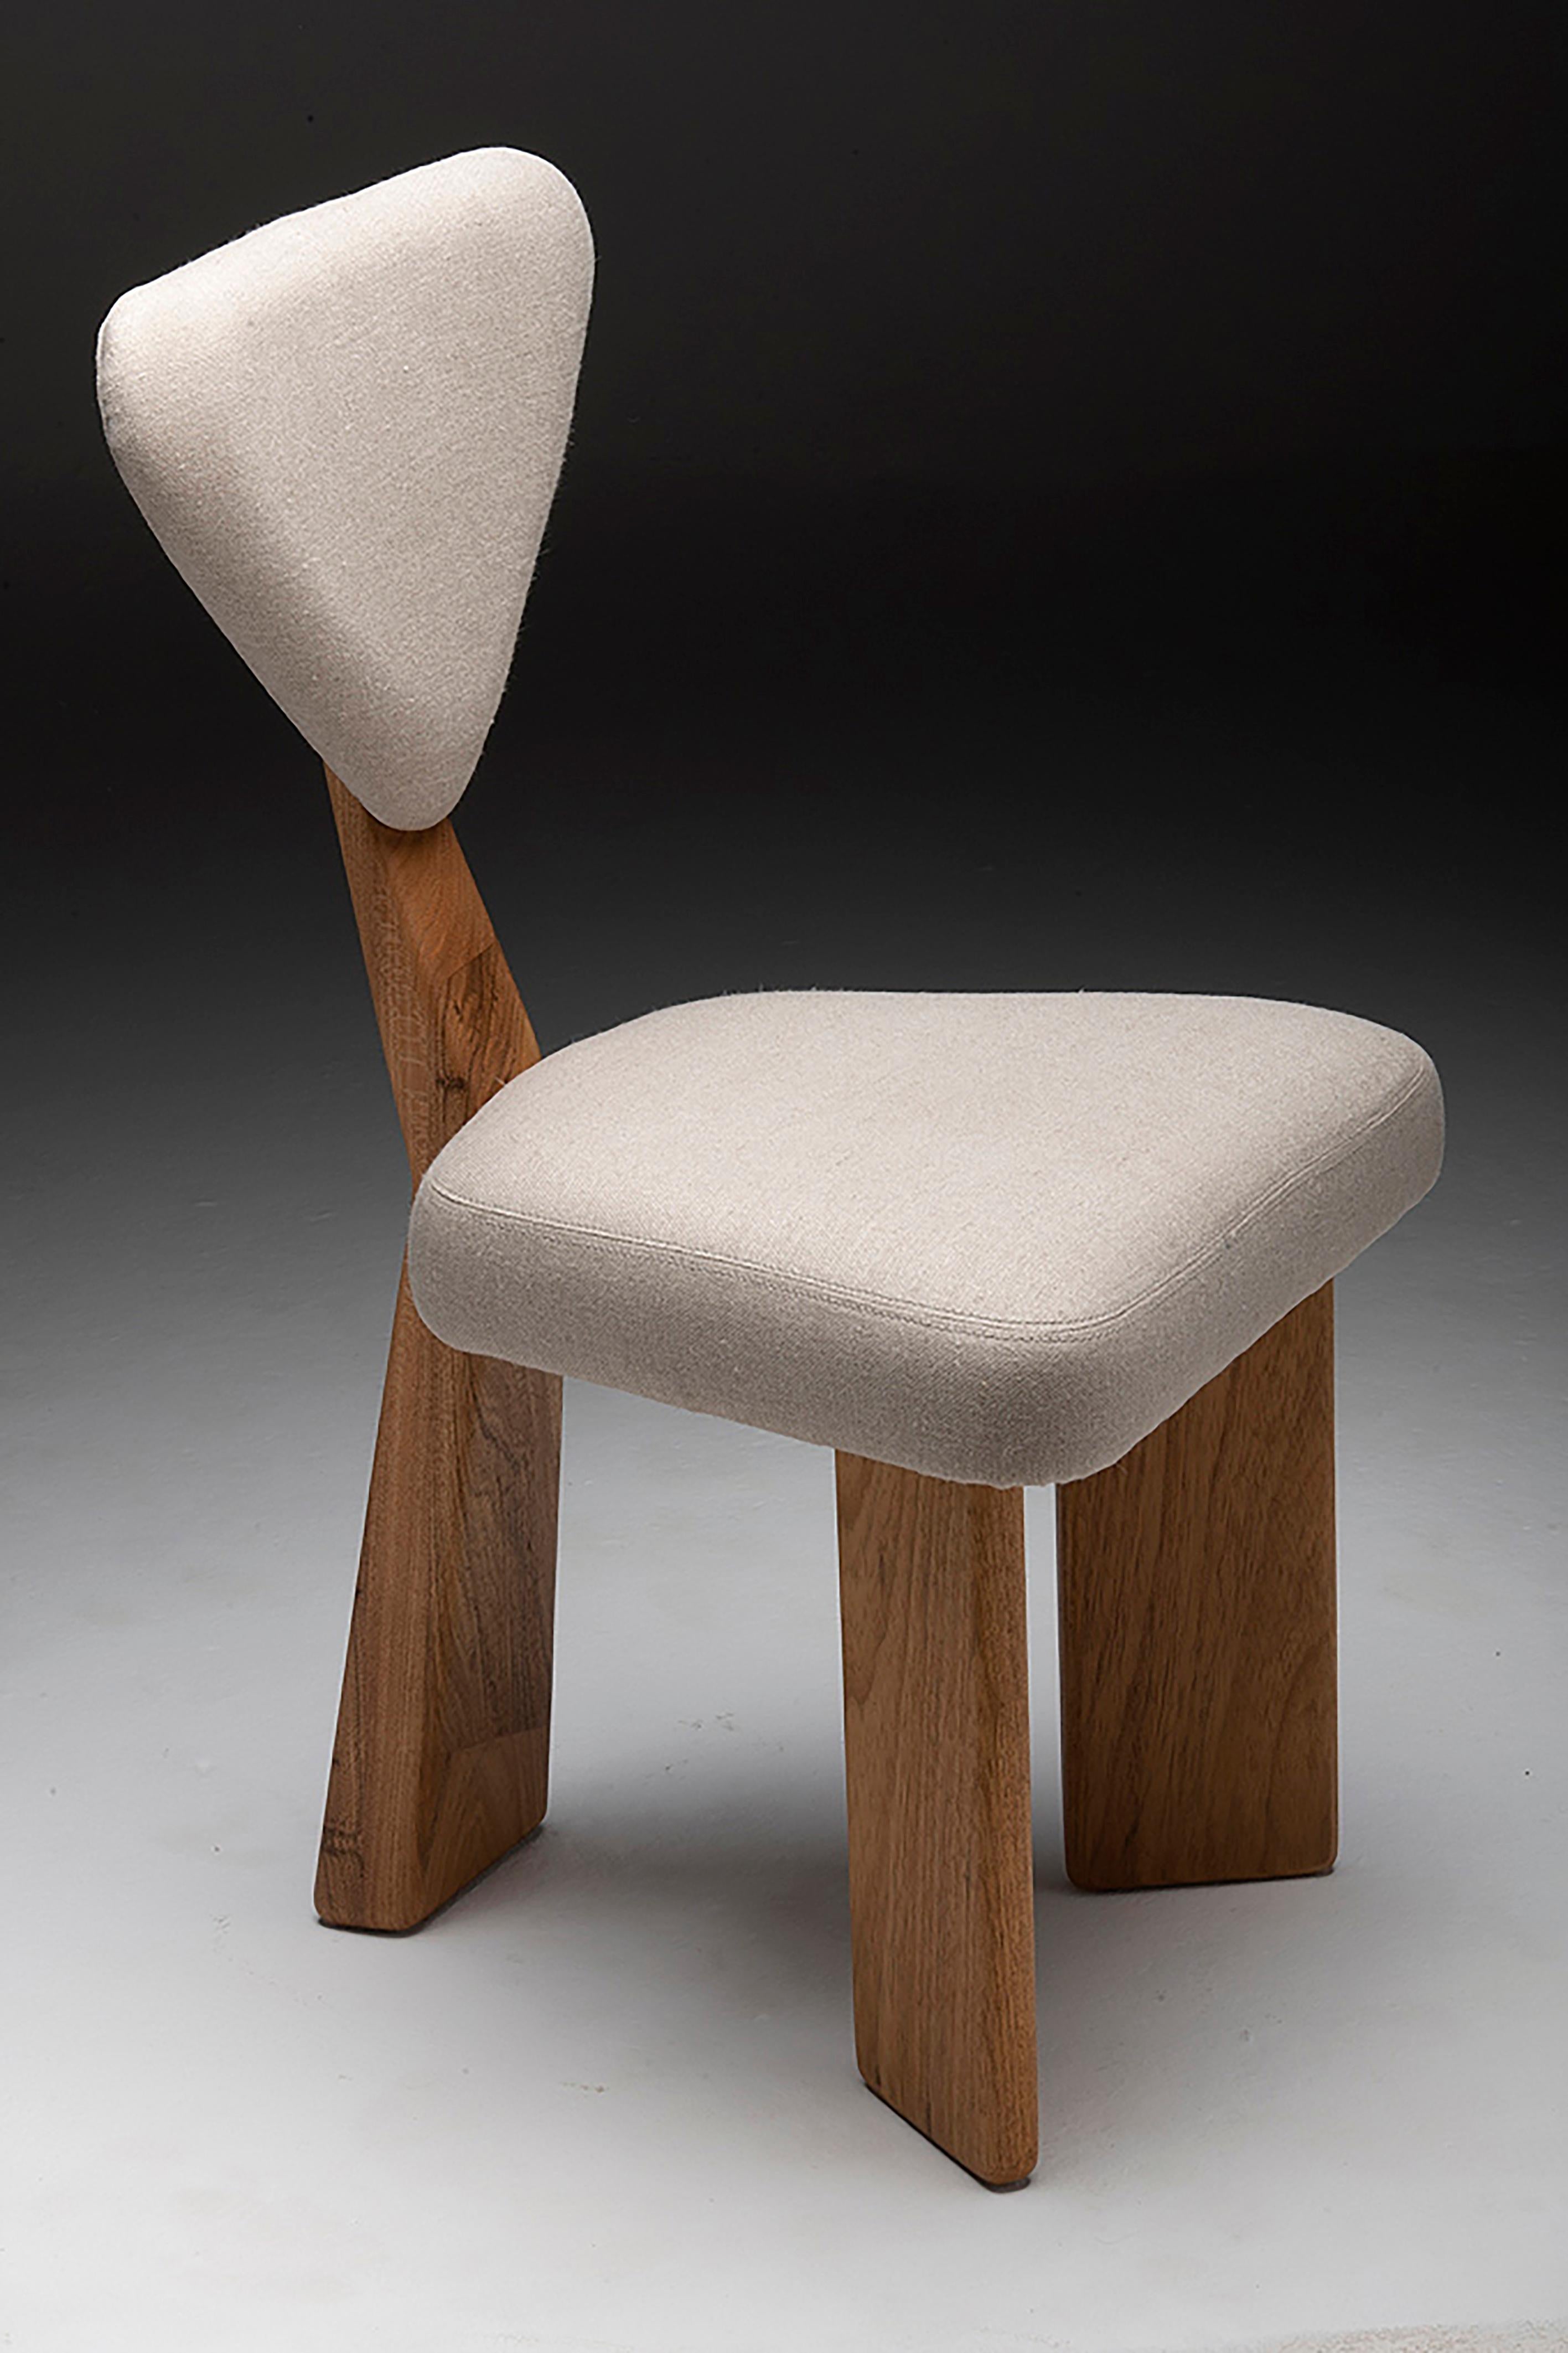 A set of  Giraffe Chair in Solid Brazilian Walnut Wood by Juliana Vasconcellos 11